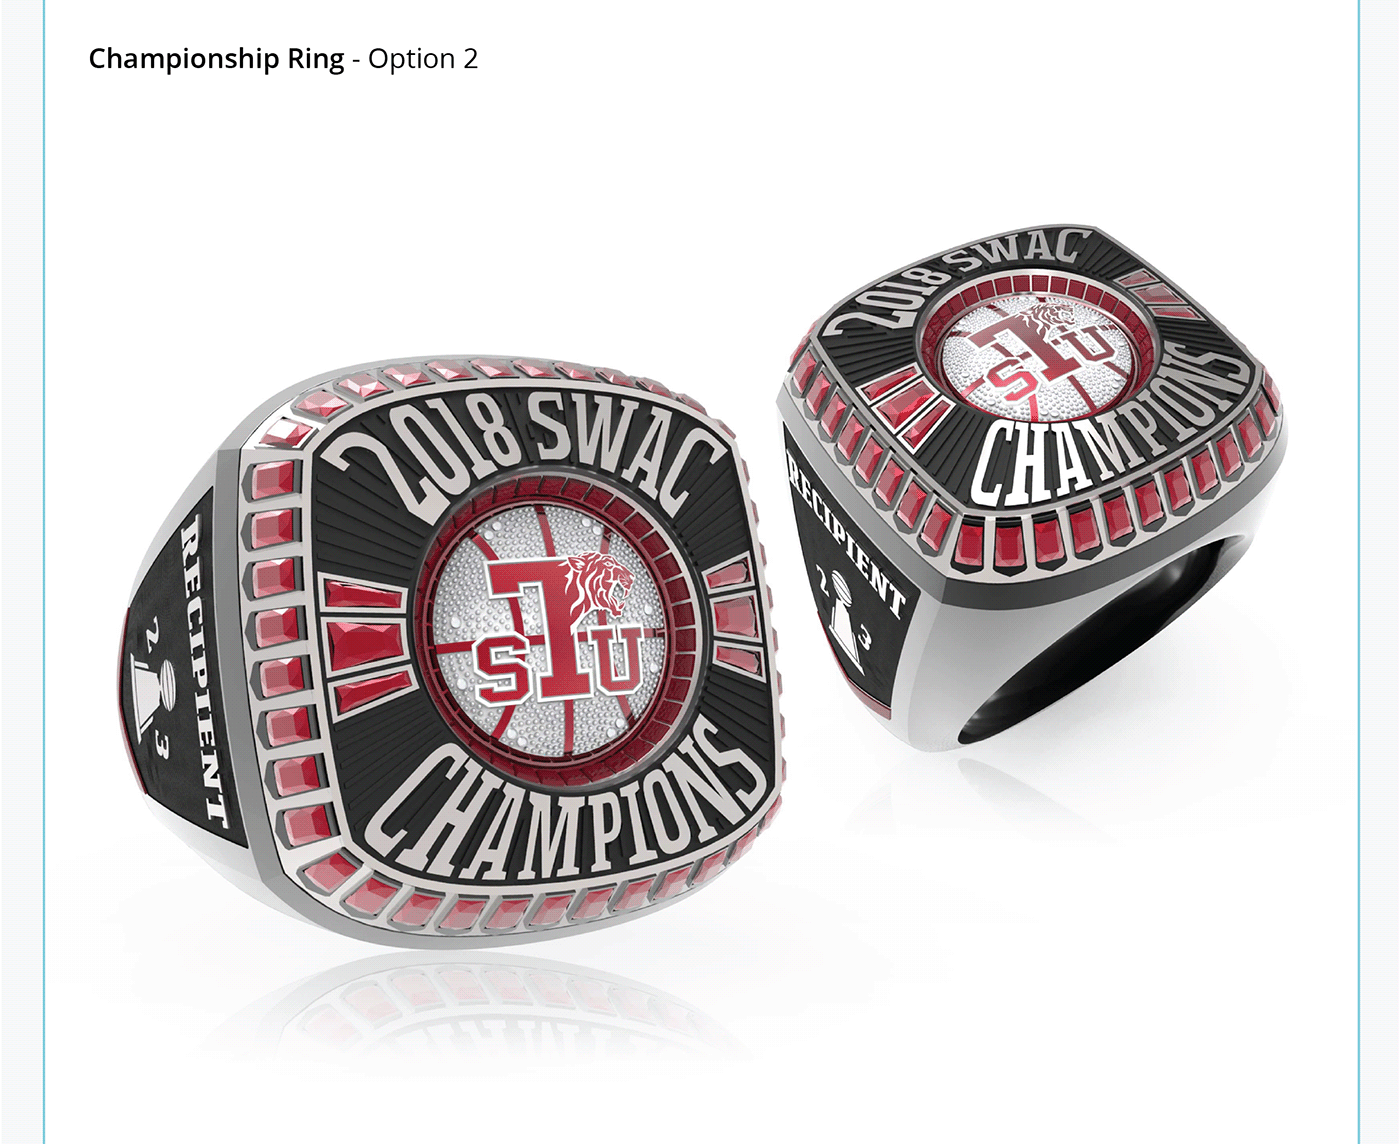 jewelry ring product design  art basketball Sports Design Rhino keyshot Visual Communication swac